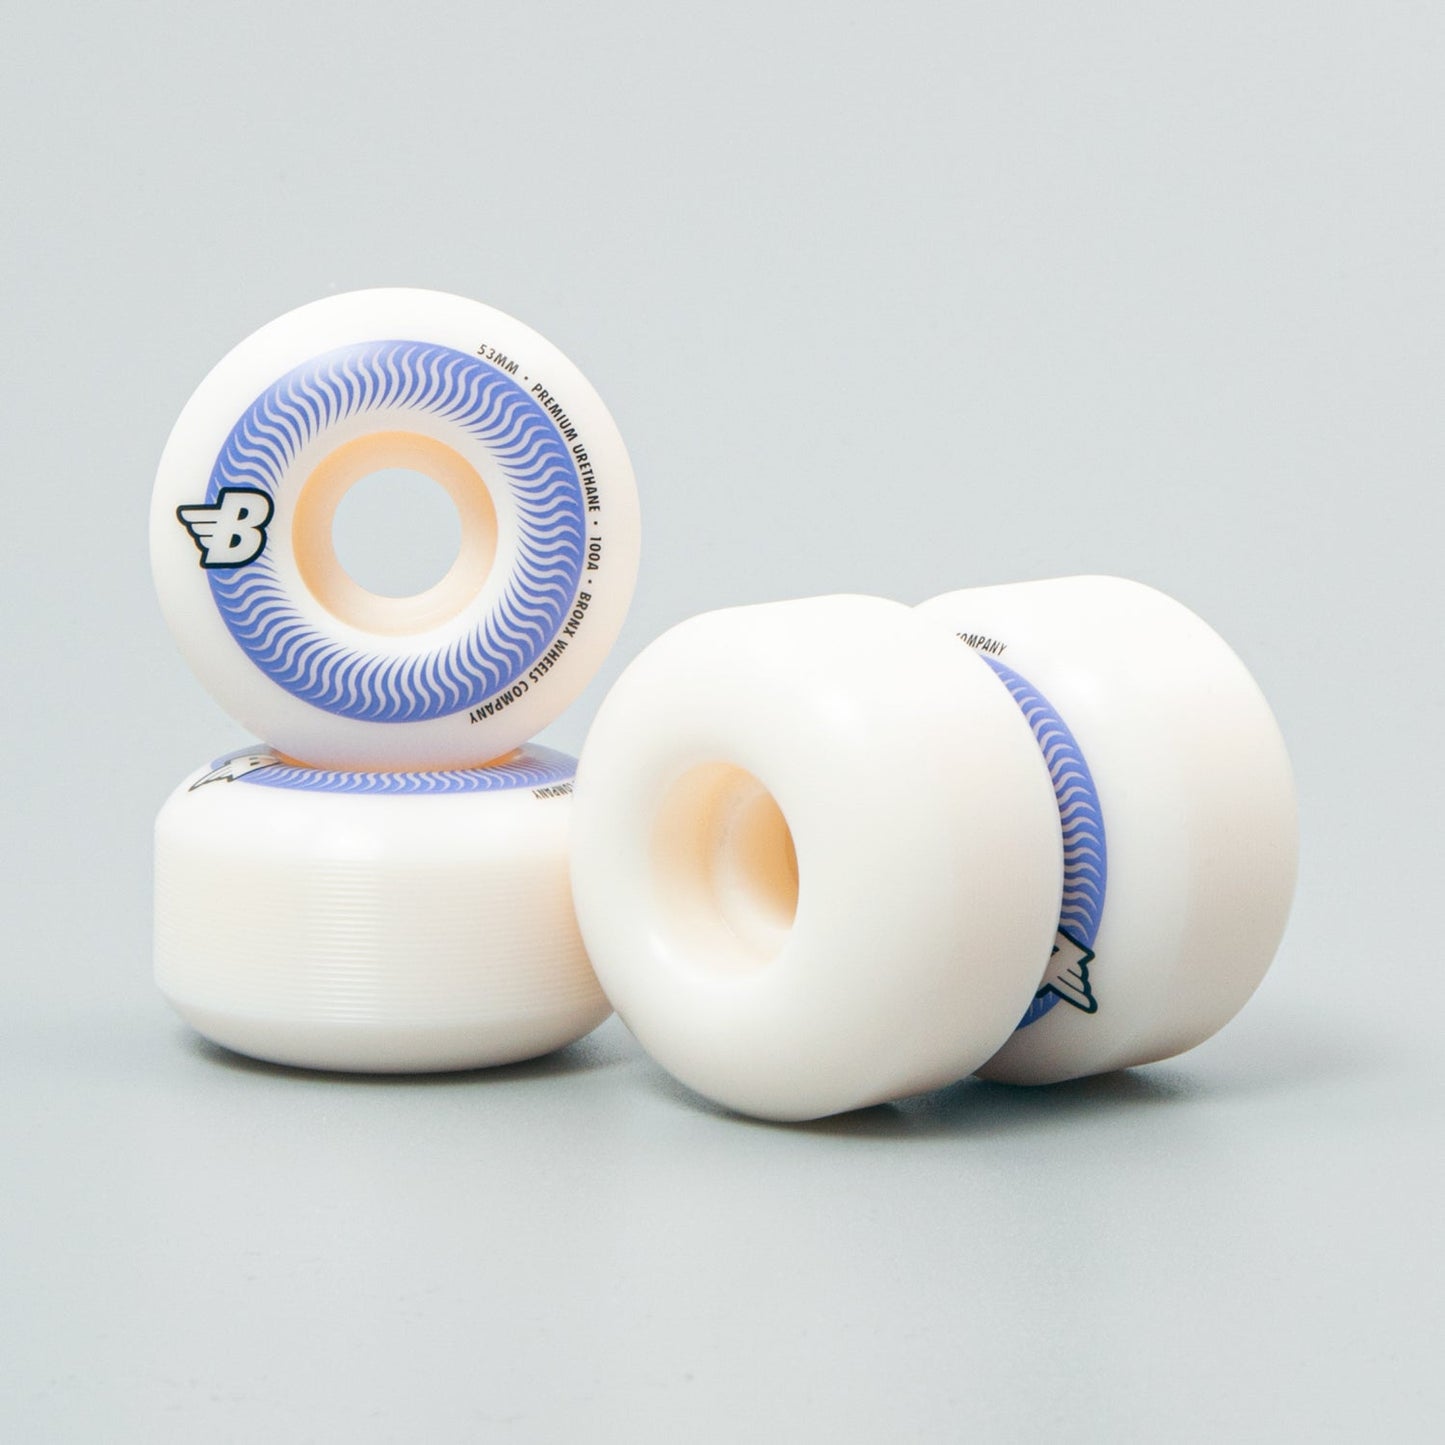 BRONX Swirl 53mm Skateboard Wheels - SkatebruhSG